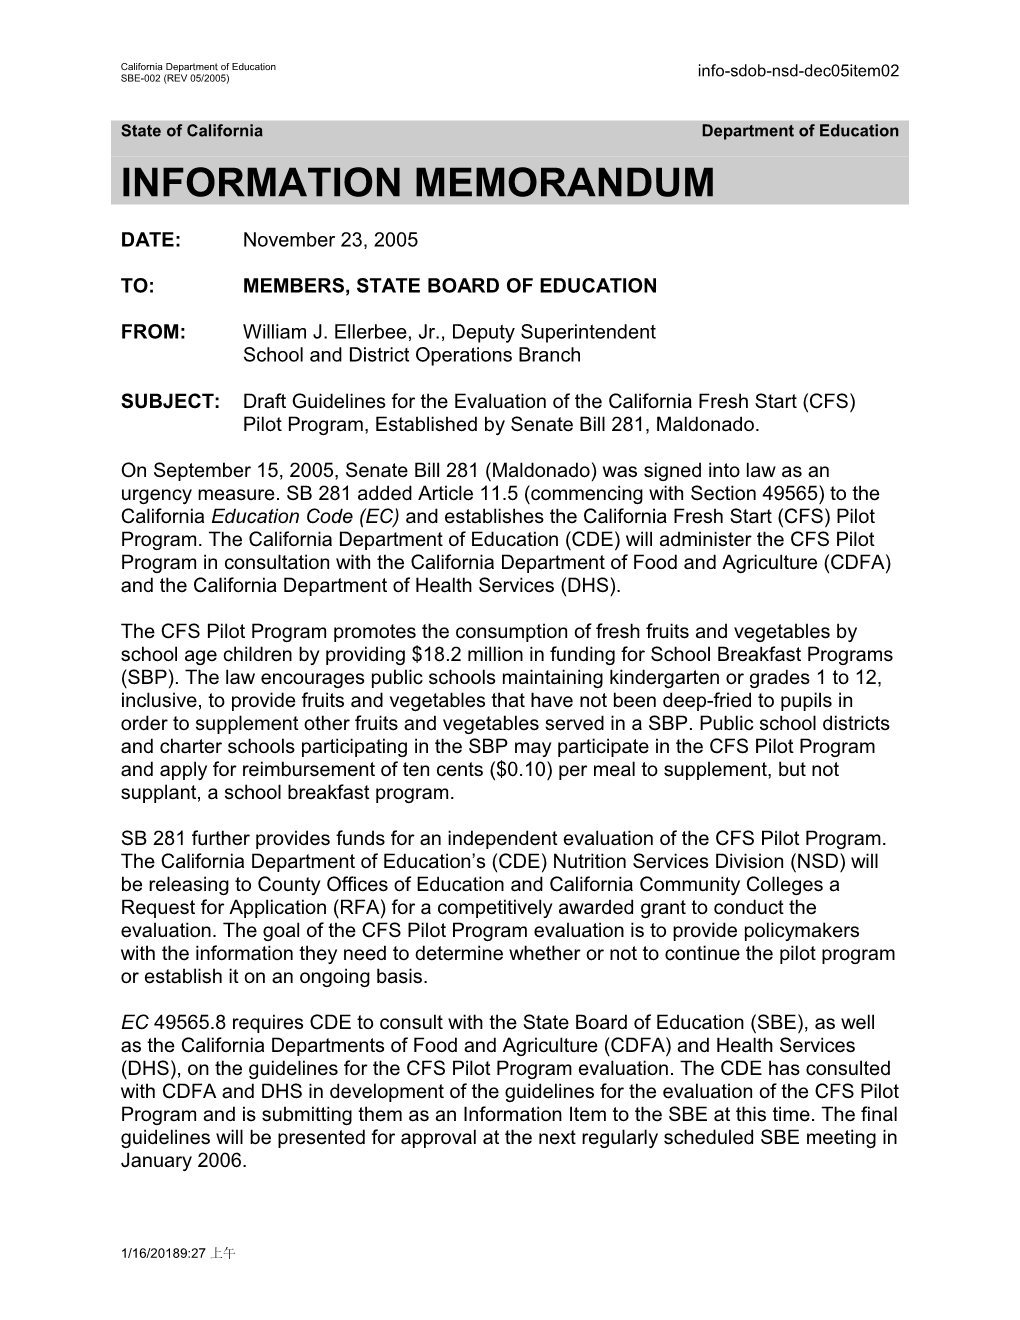 December 2005 NSD Item 2 - Information Memorandum (CA State Board of Education)